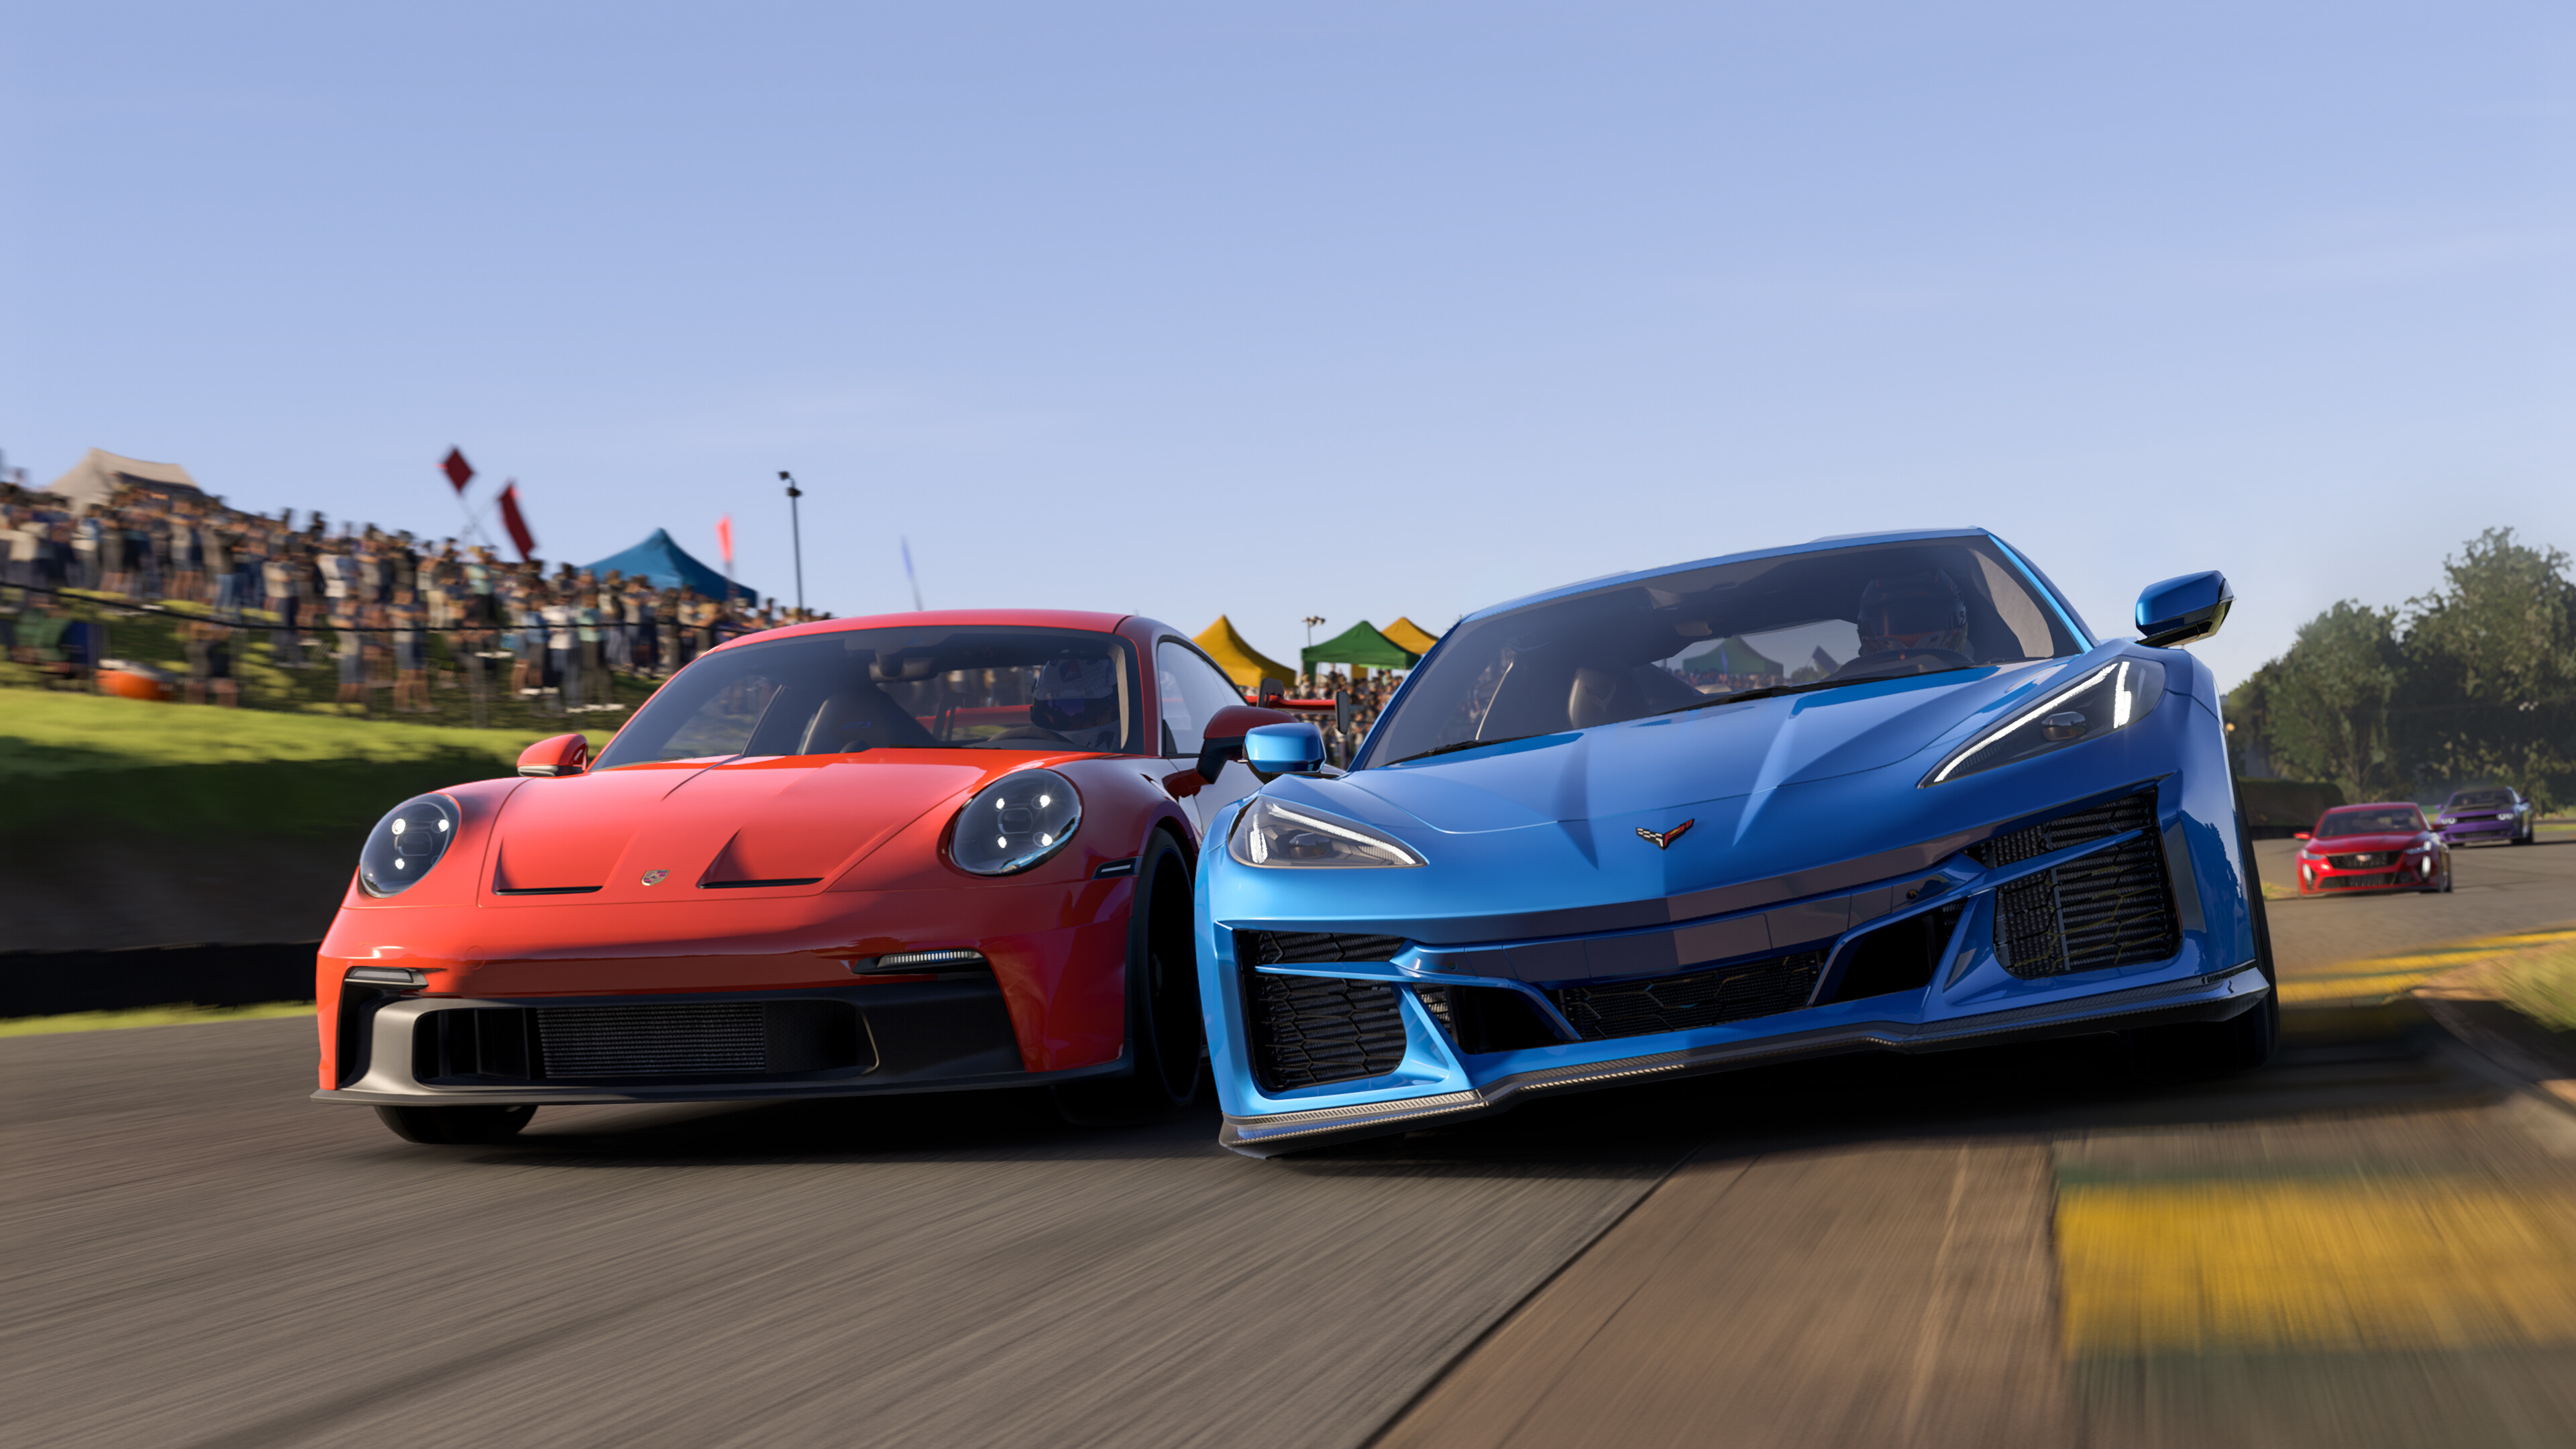 Forza Motorsport Free Download